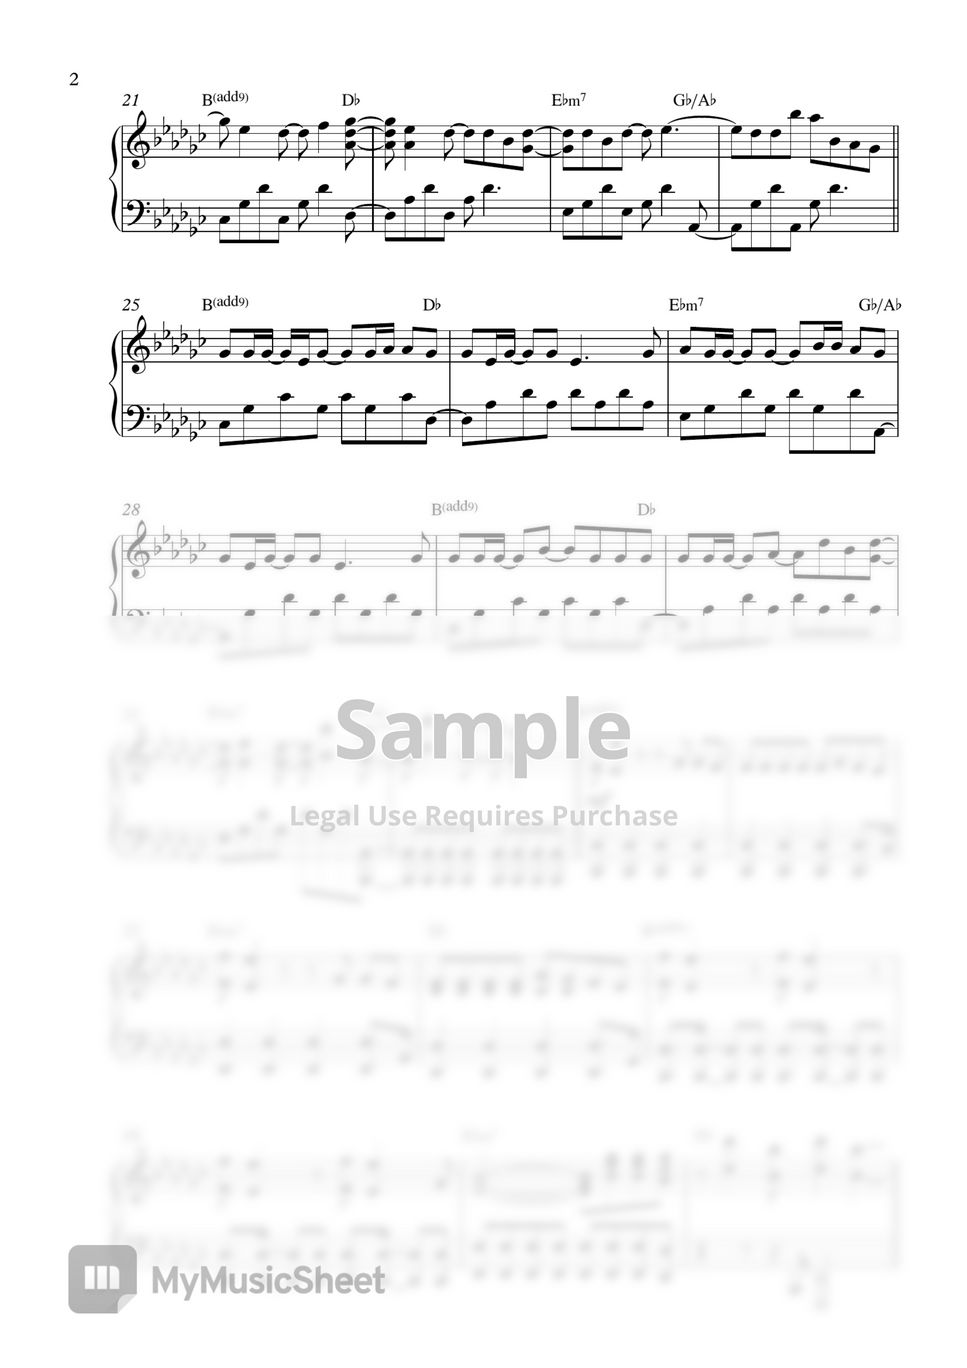 BTS - Stay (Piano Sheet) by Pianella Piano